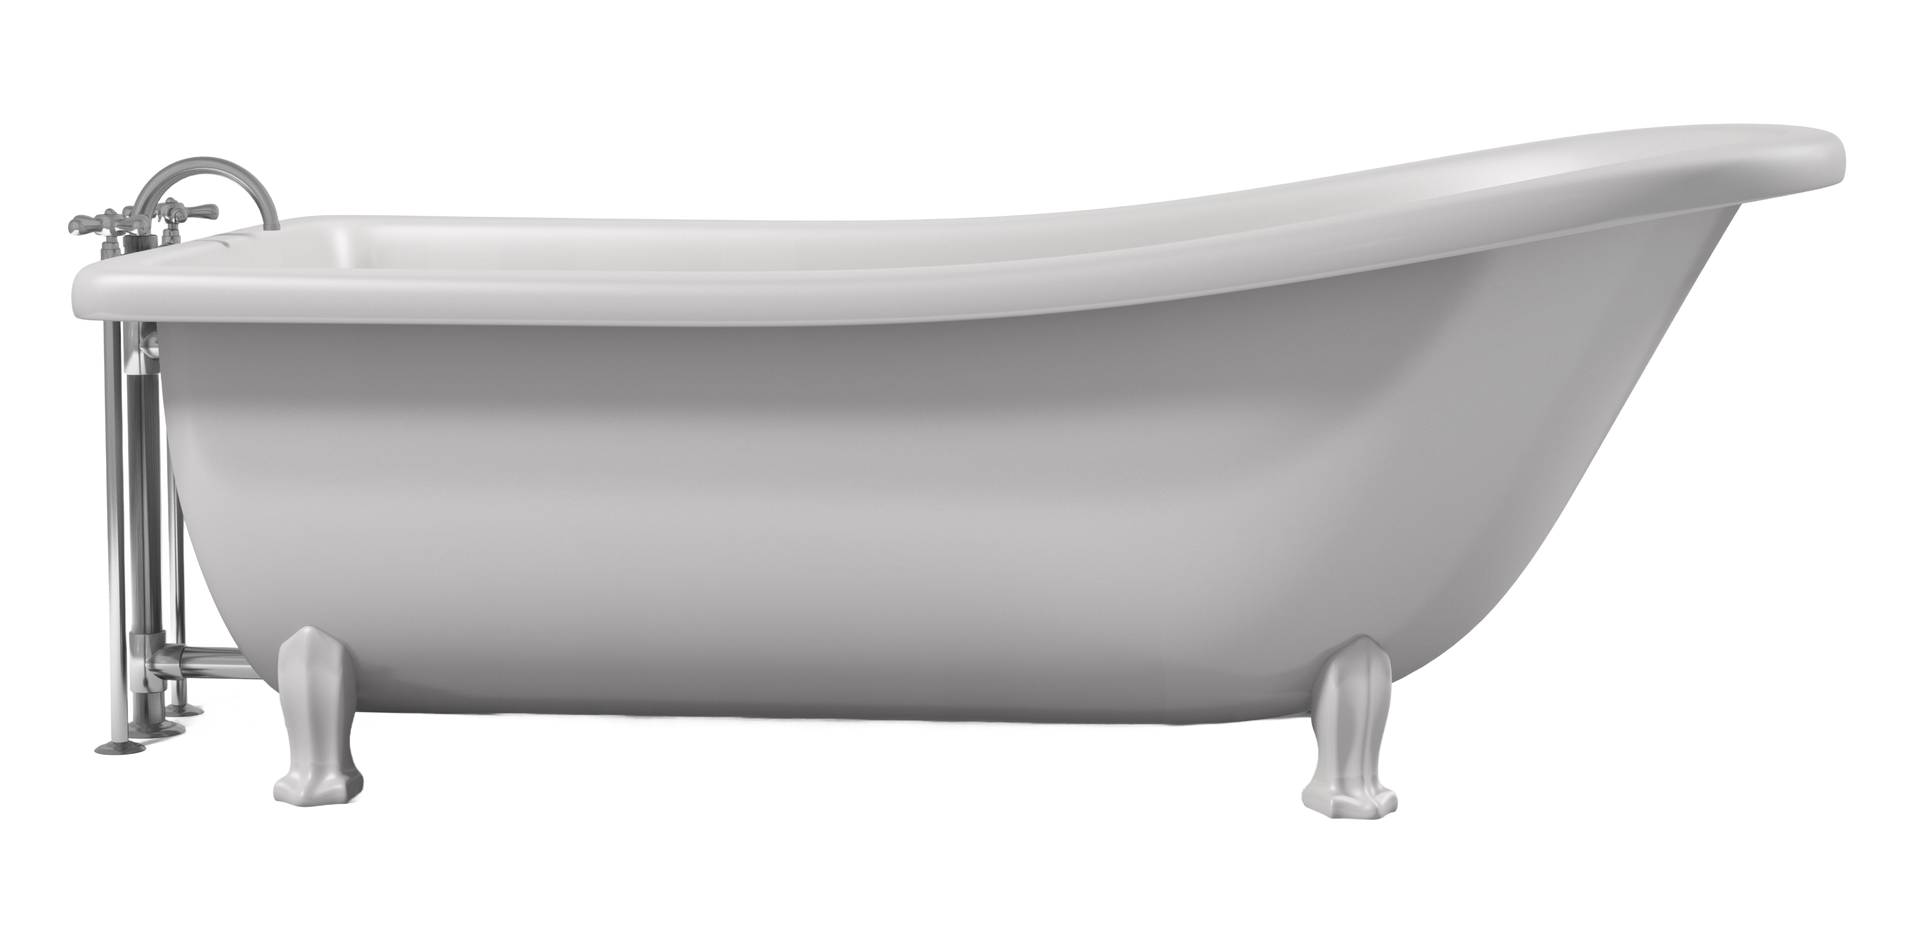 a white bathtub with claw feet and a chrome faucet